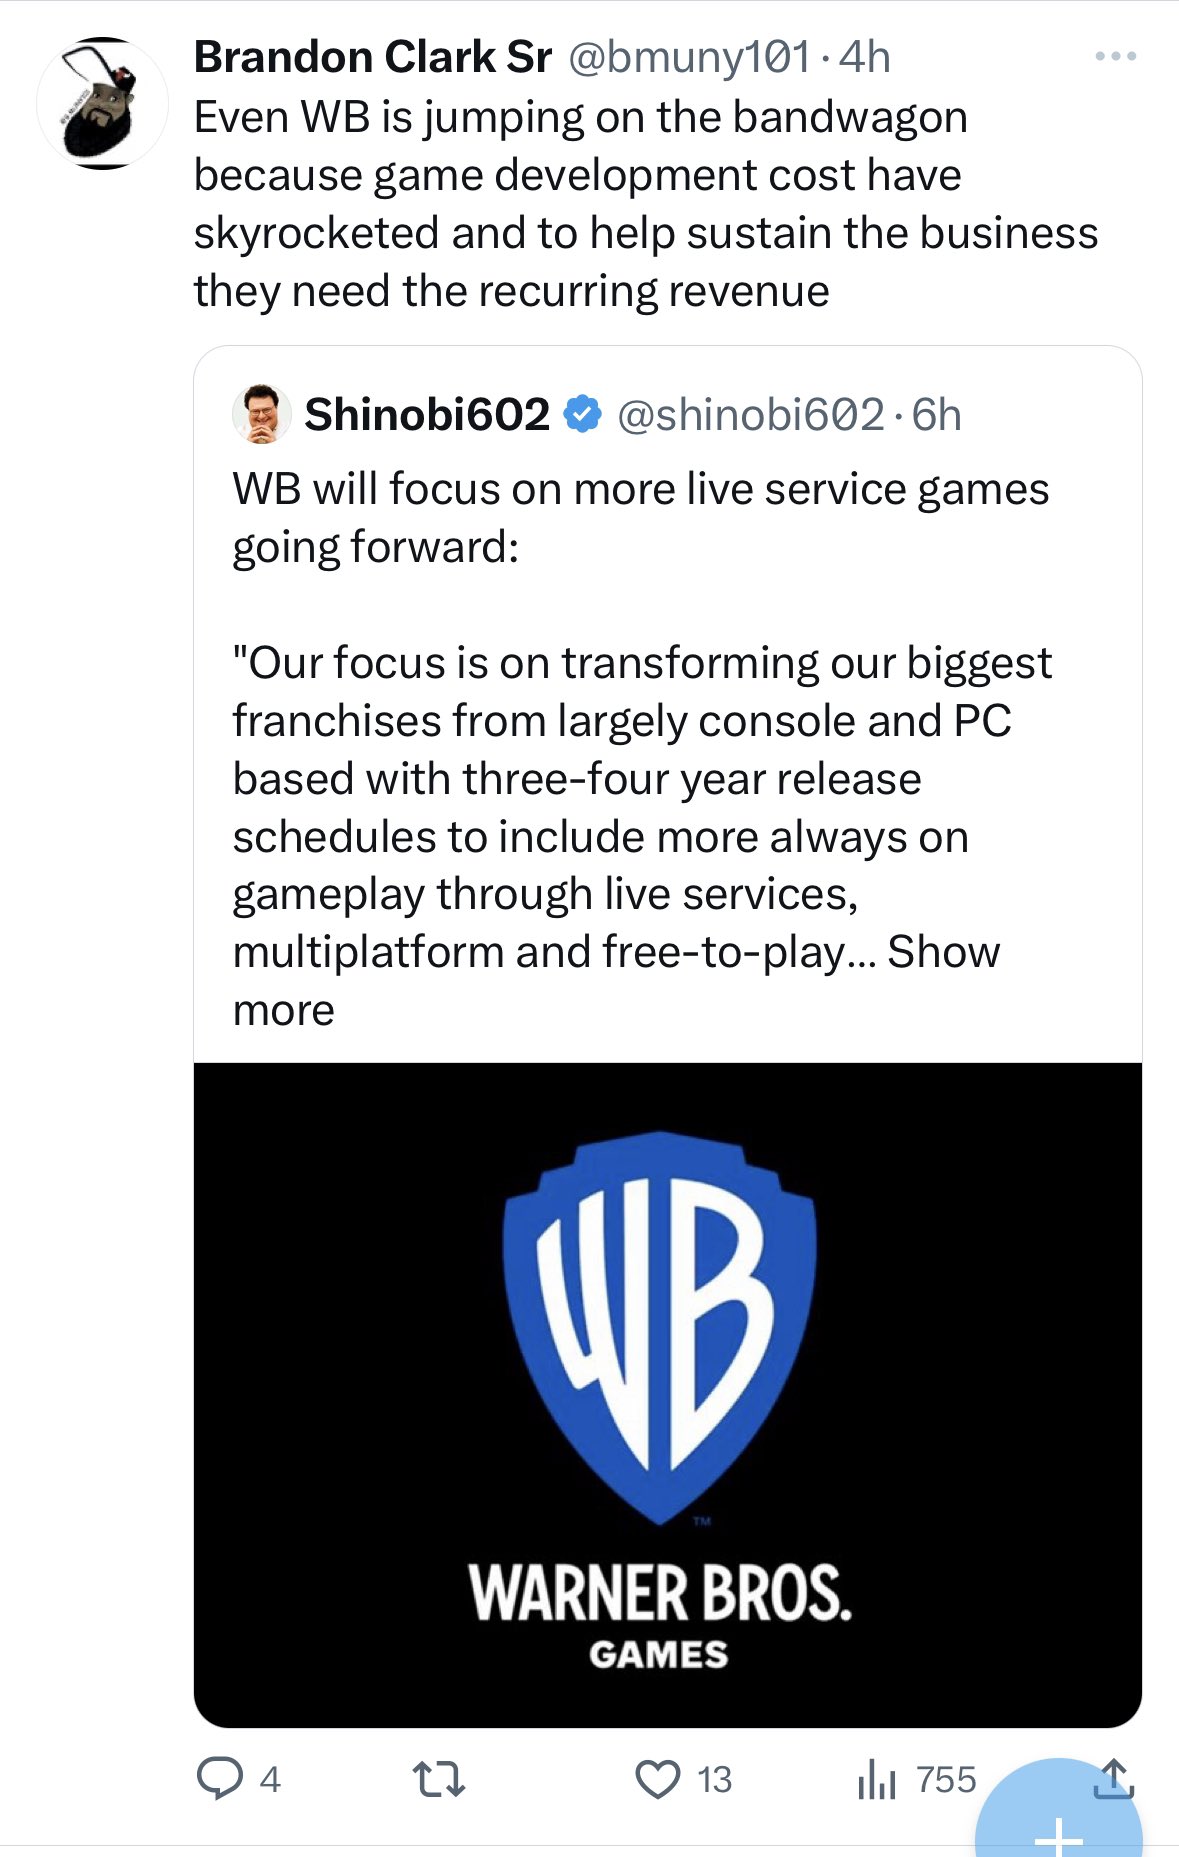 Warner Bros. wants to make more live service games